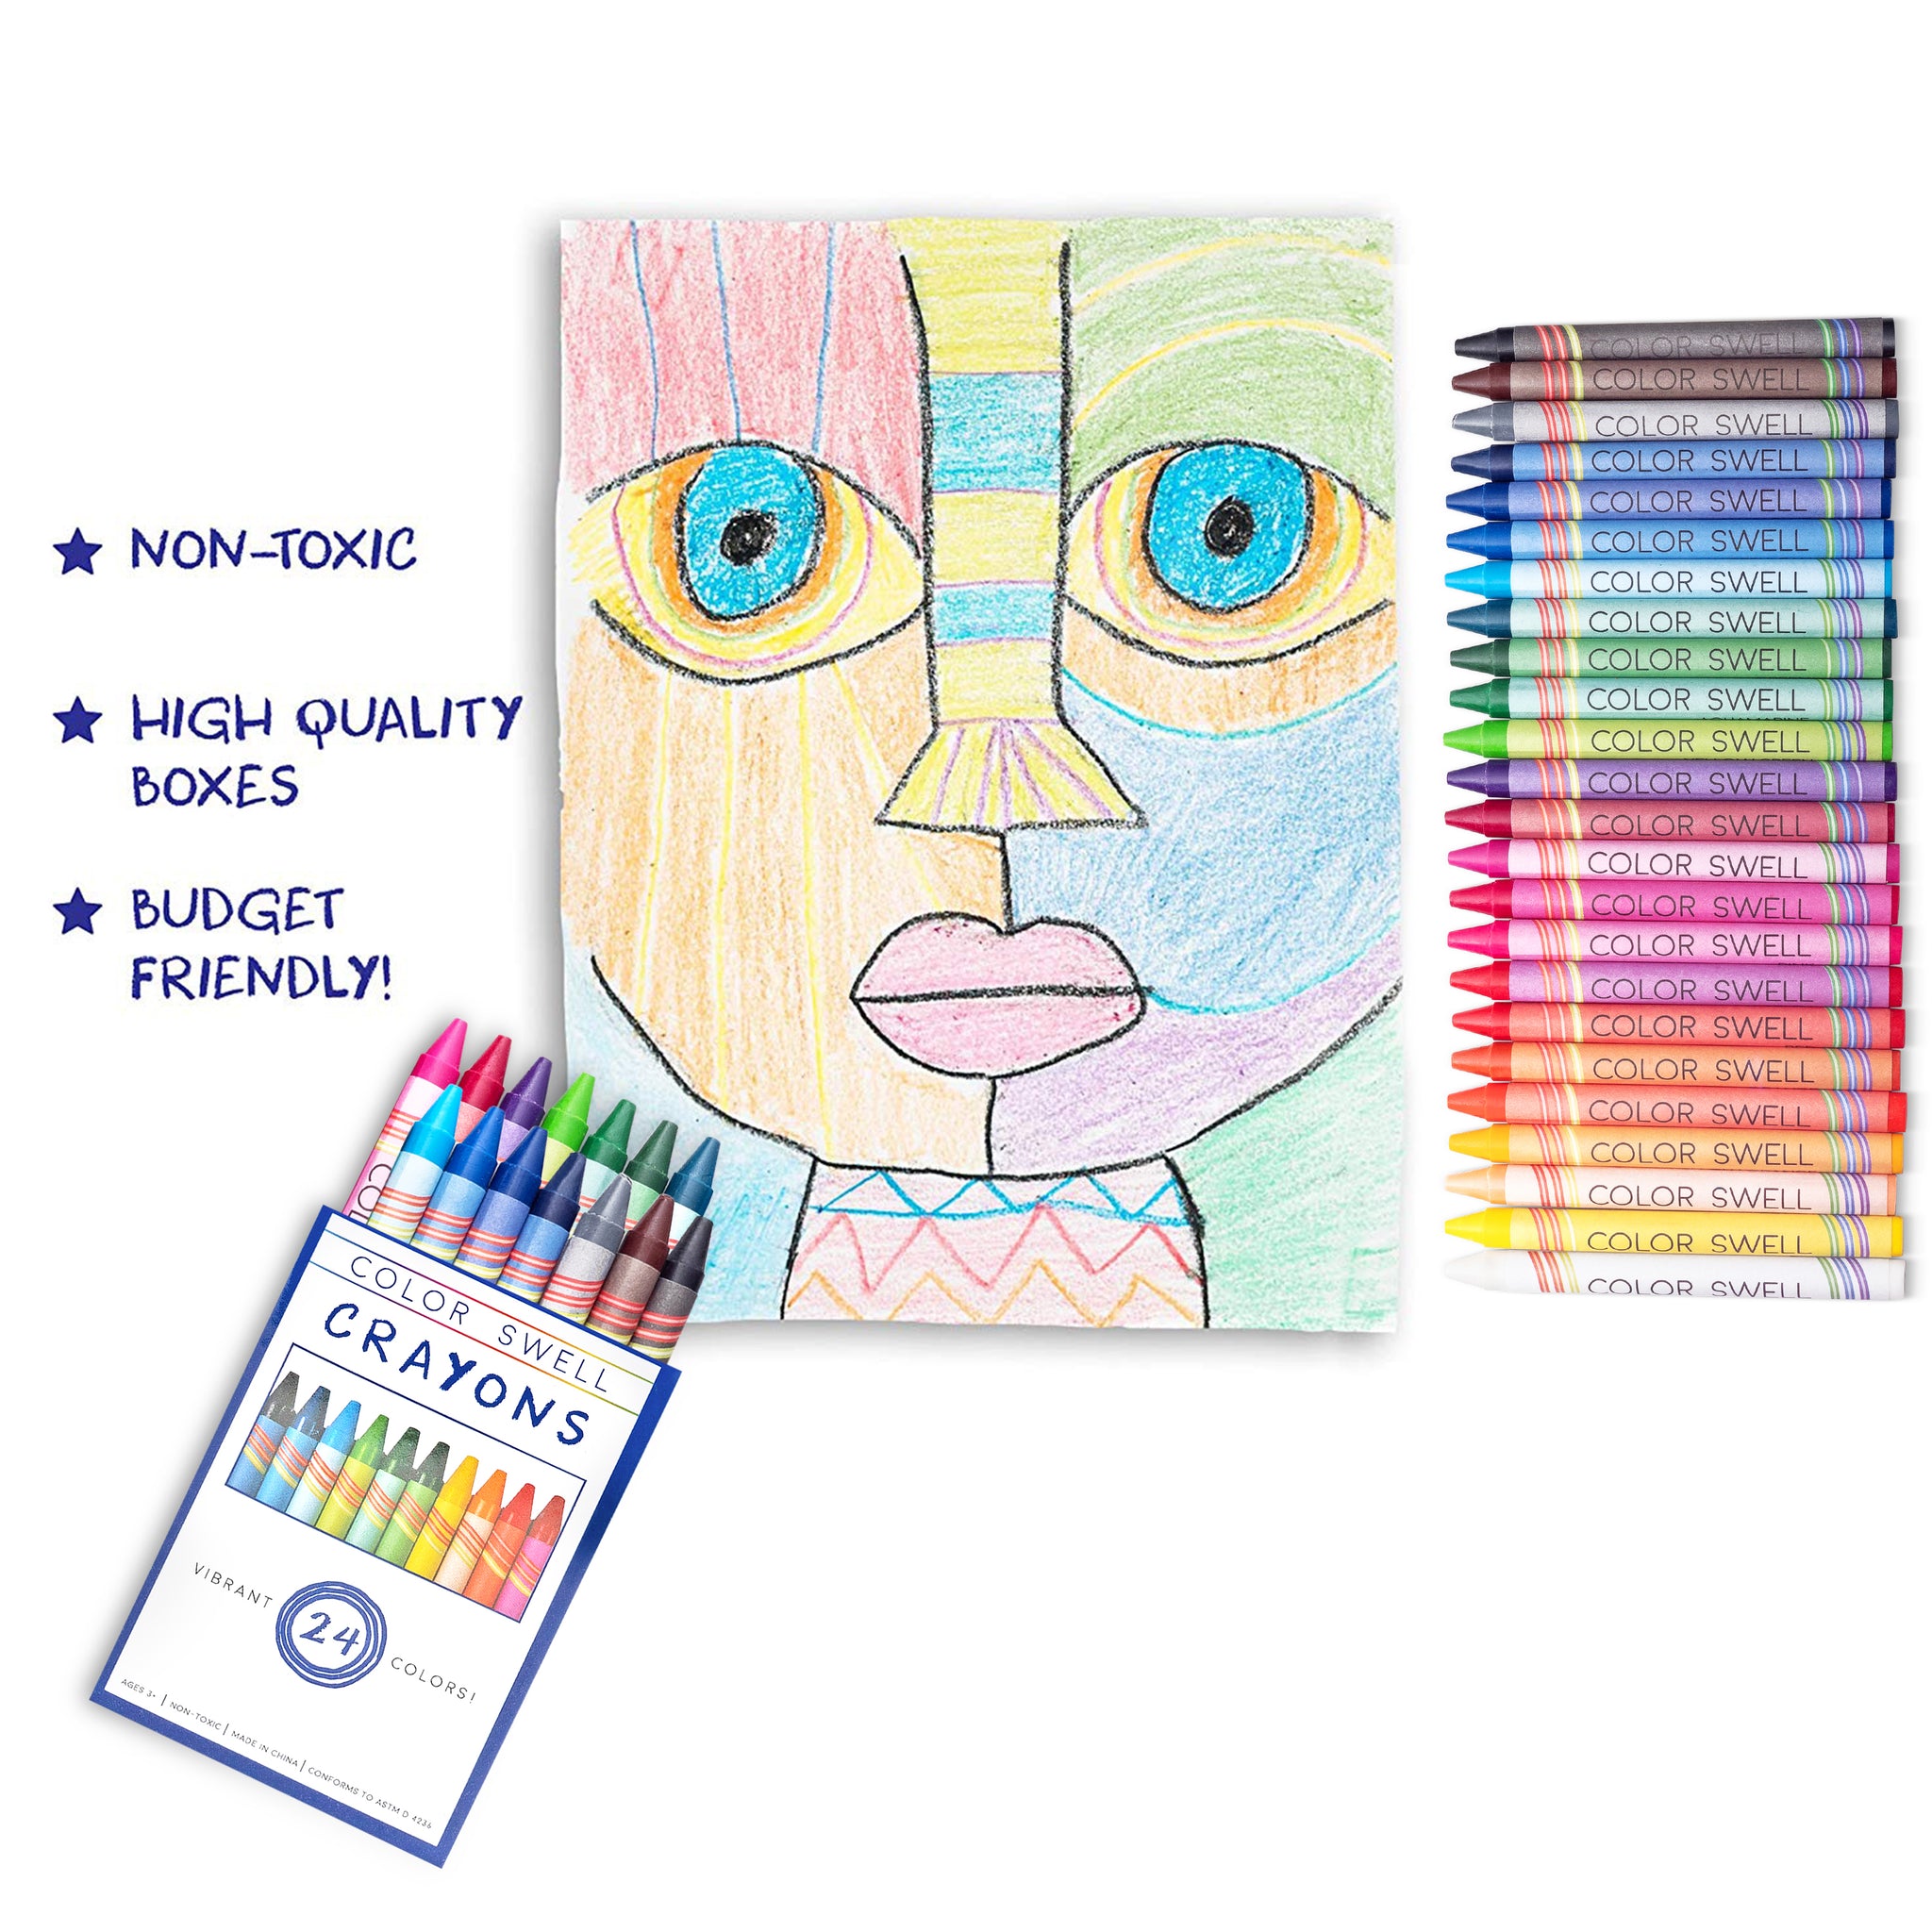 White Crayola Crayons 24 Pack of White Crayons, Bulk Crayons for Melting,  Coloring Supplies, Bulk White Crayons, Coloring Crafts 